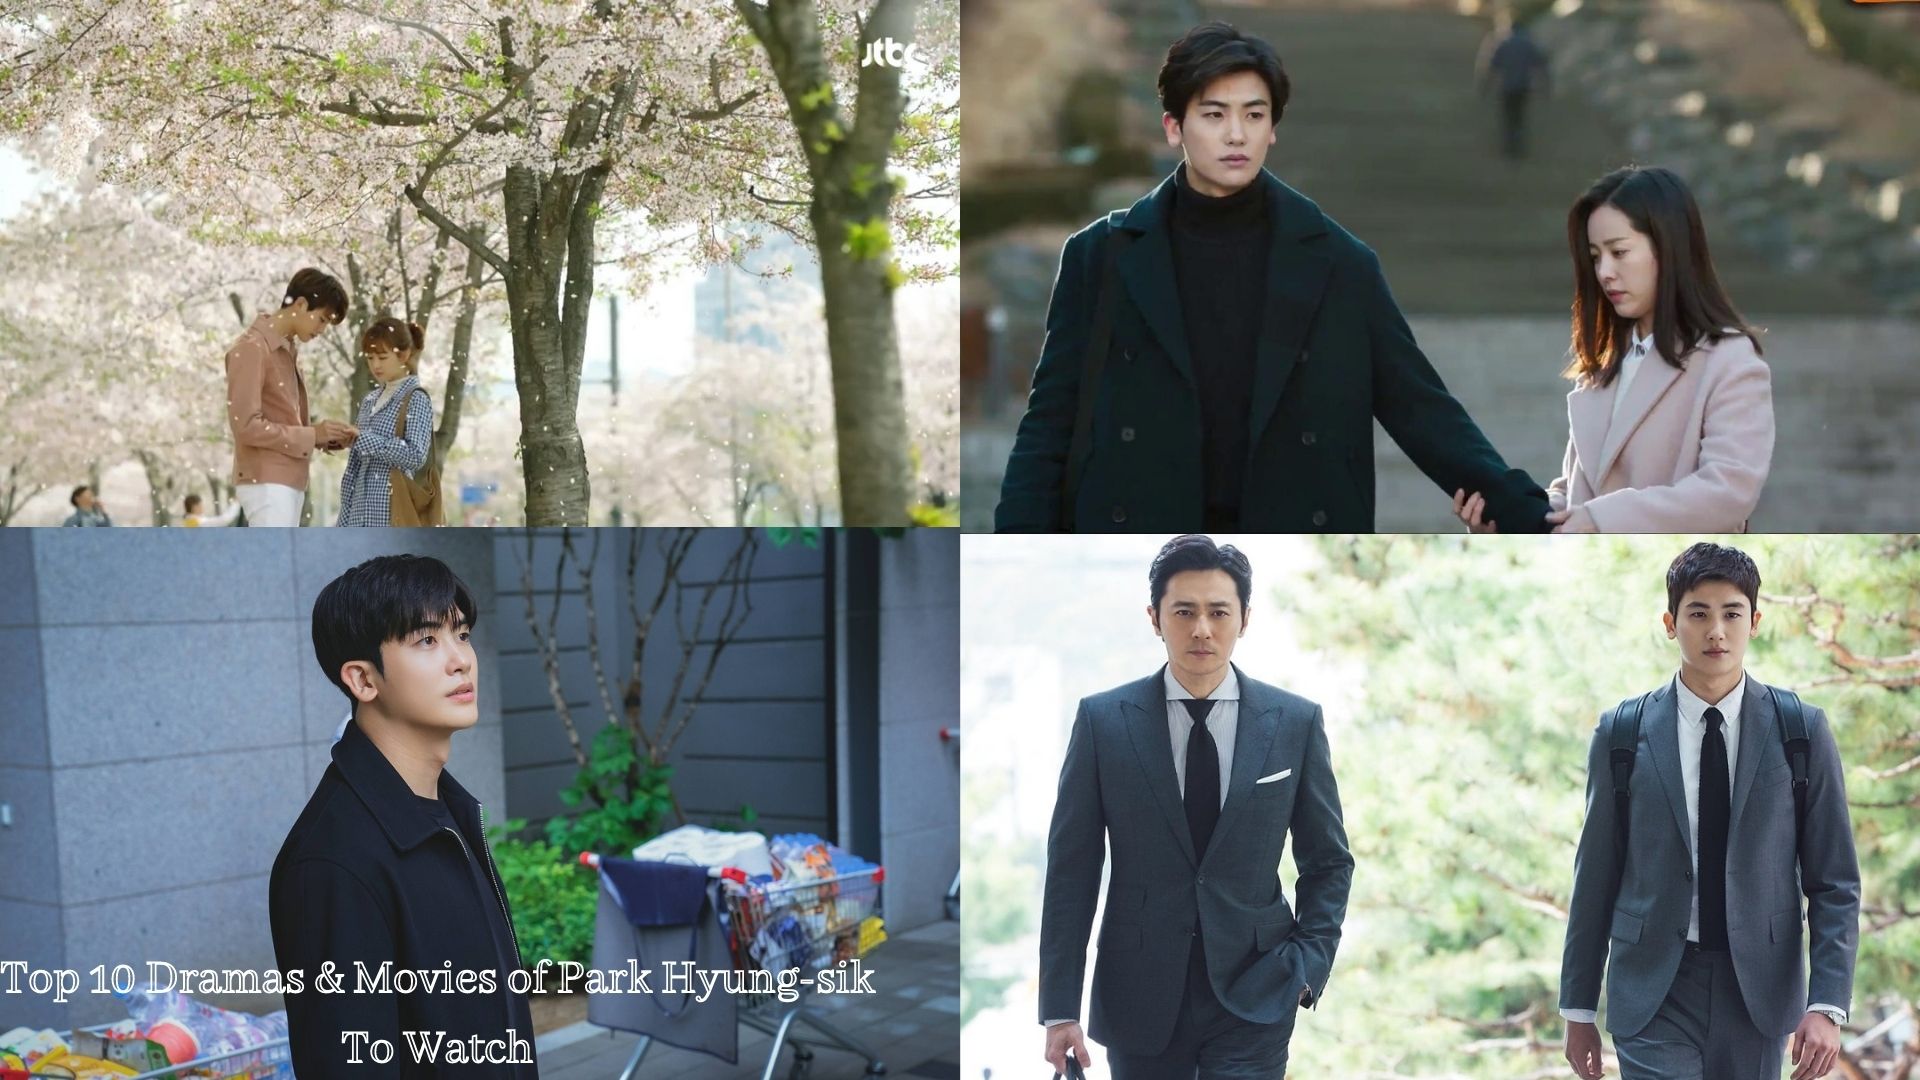 Park hyung sik new drama